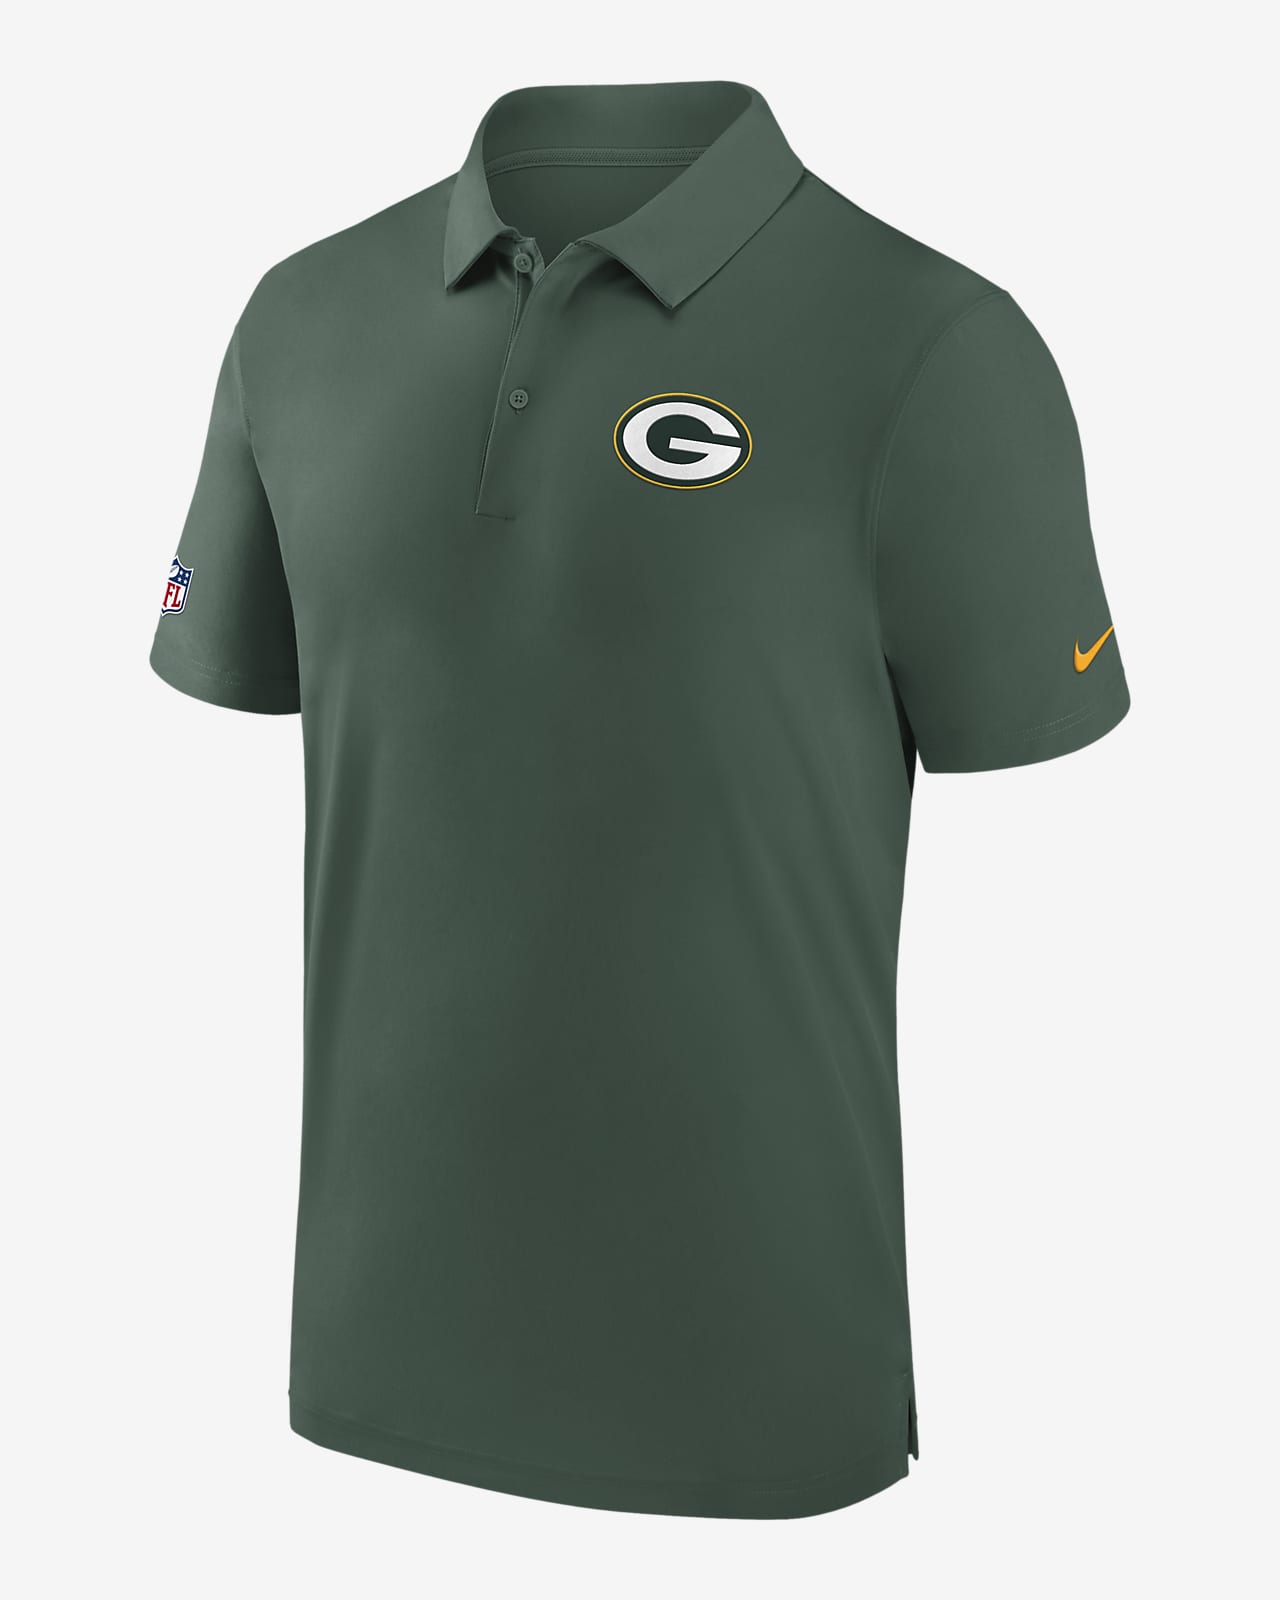 Polo Nike Dri-FIT de la NFL para hombre Green Bay Packers Sideline Coach